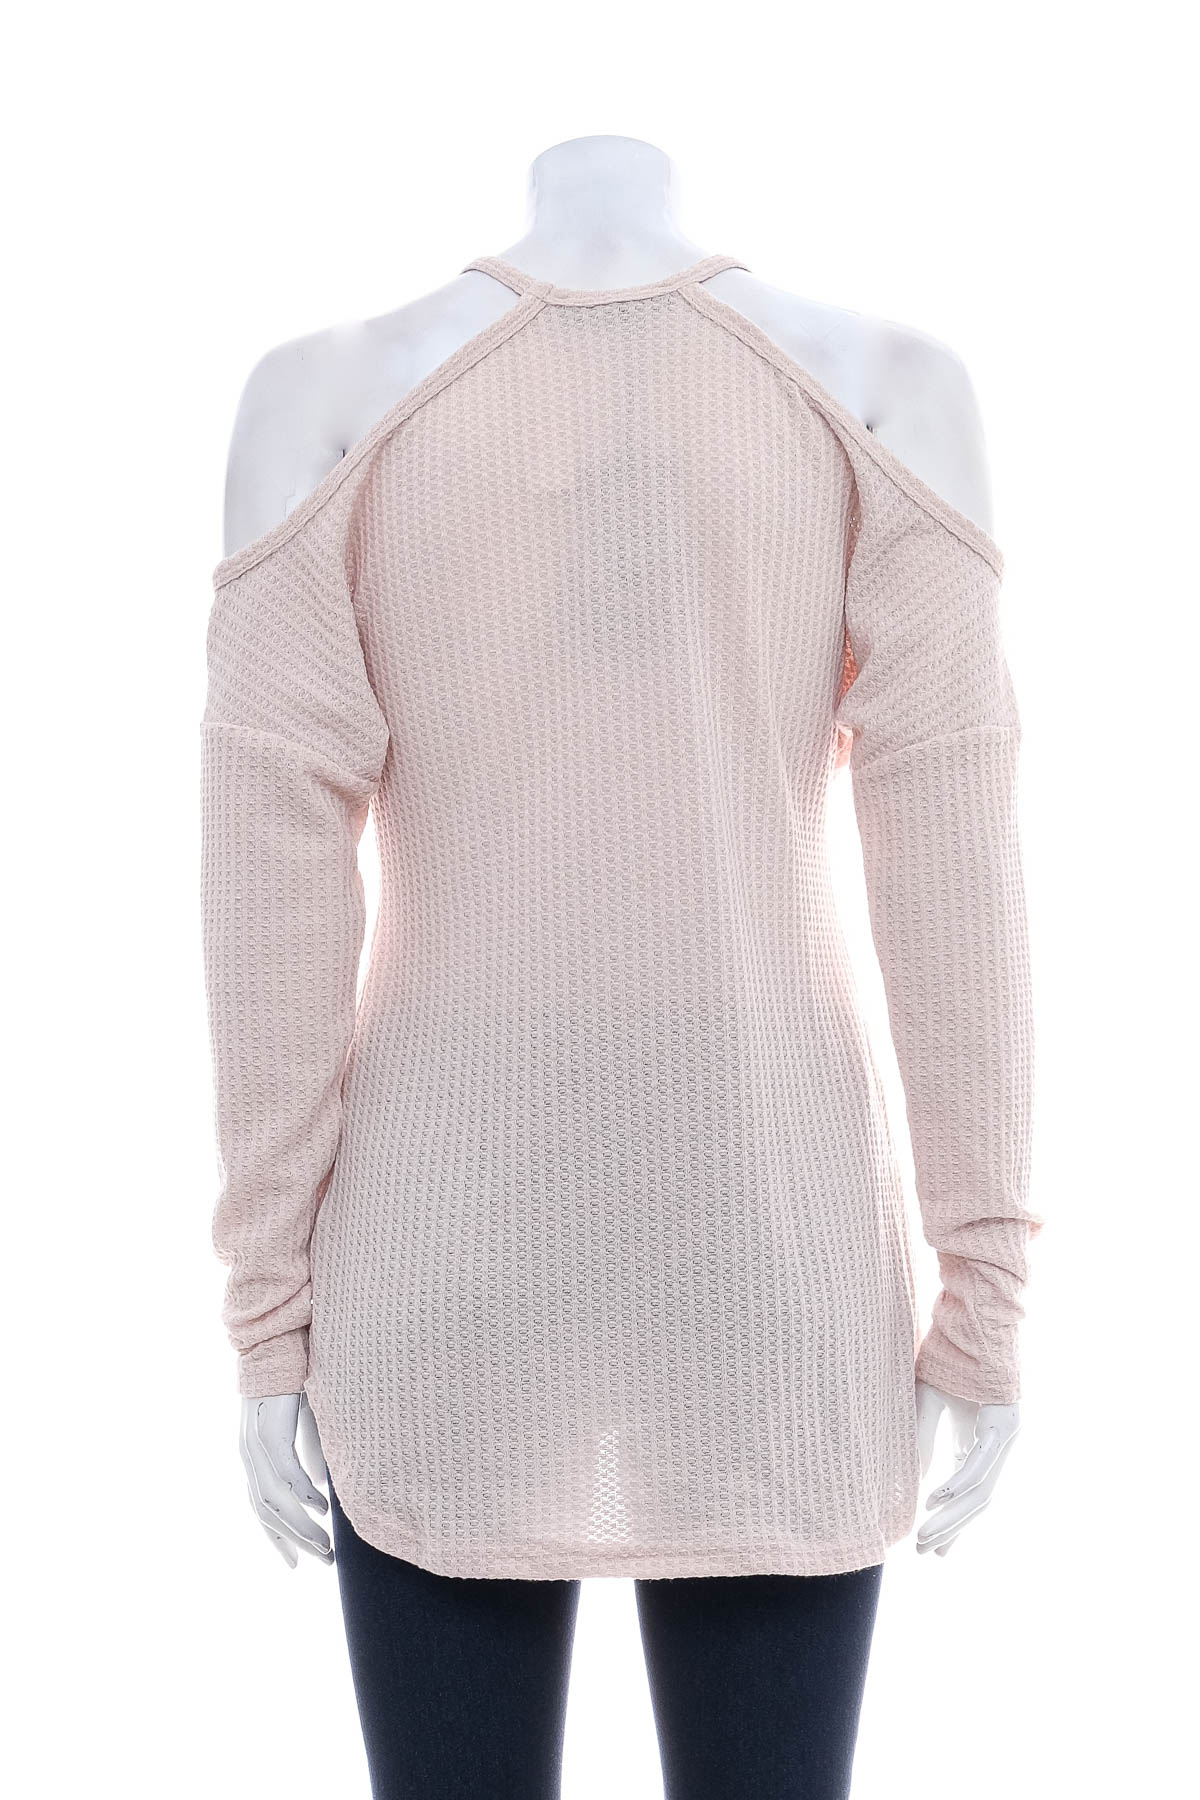 Women's sweater - CNFIO comfort & confidence - 1